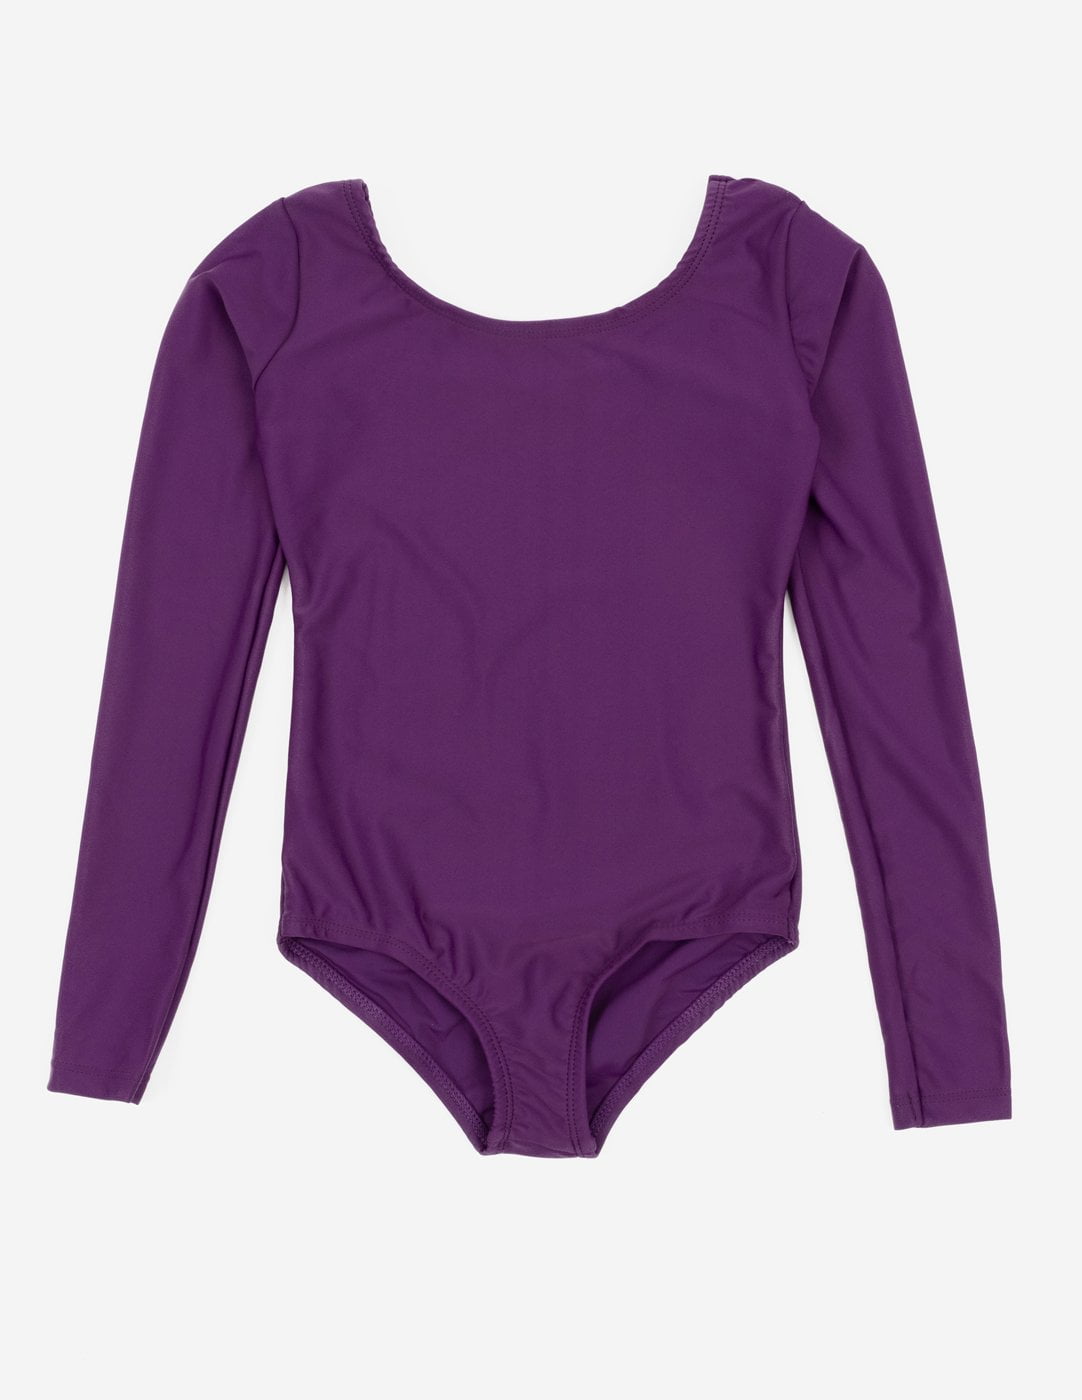 Leveret Kids Long Sleeve Leotard Dark Purple S (6-8) - Walmart.com